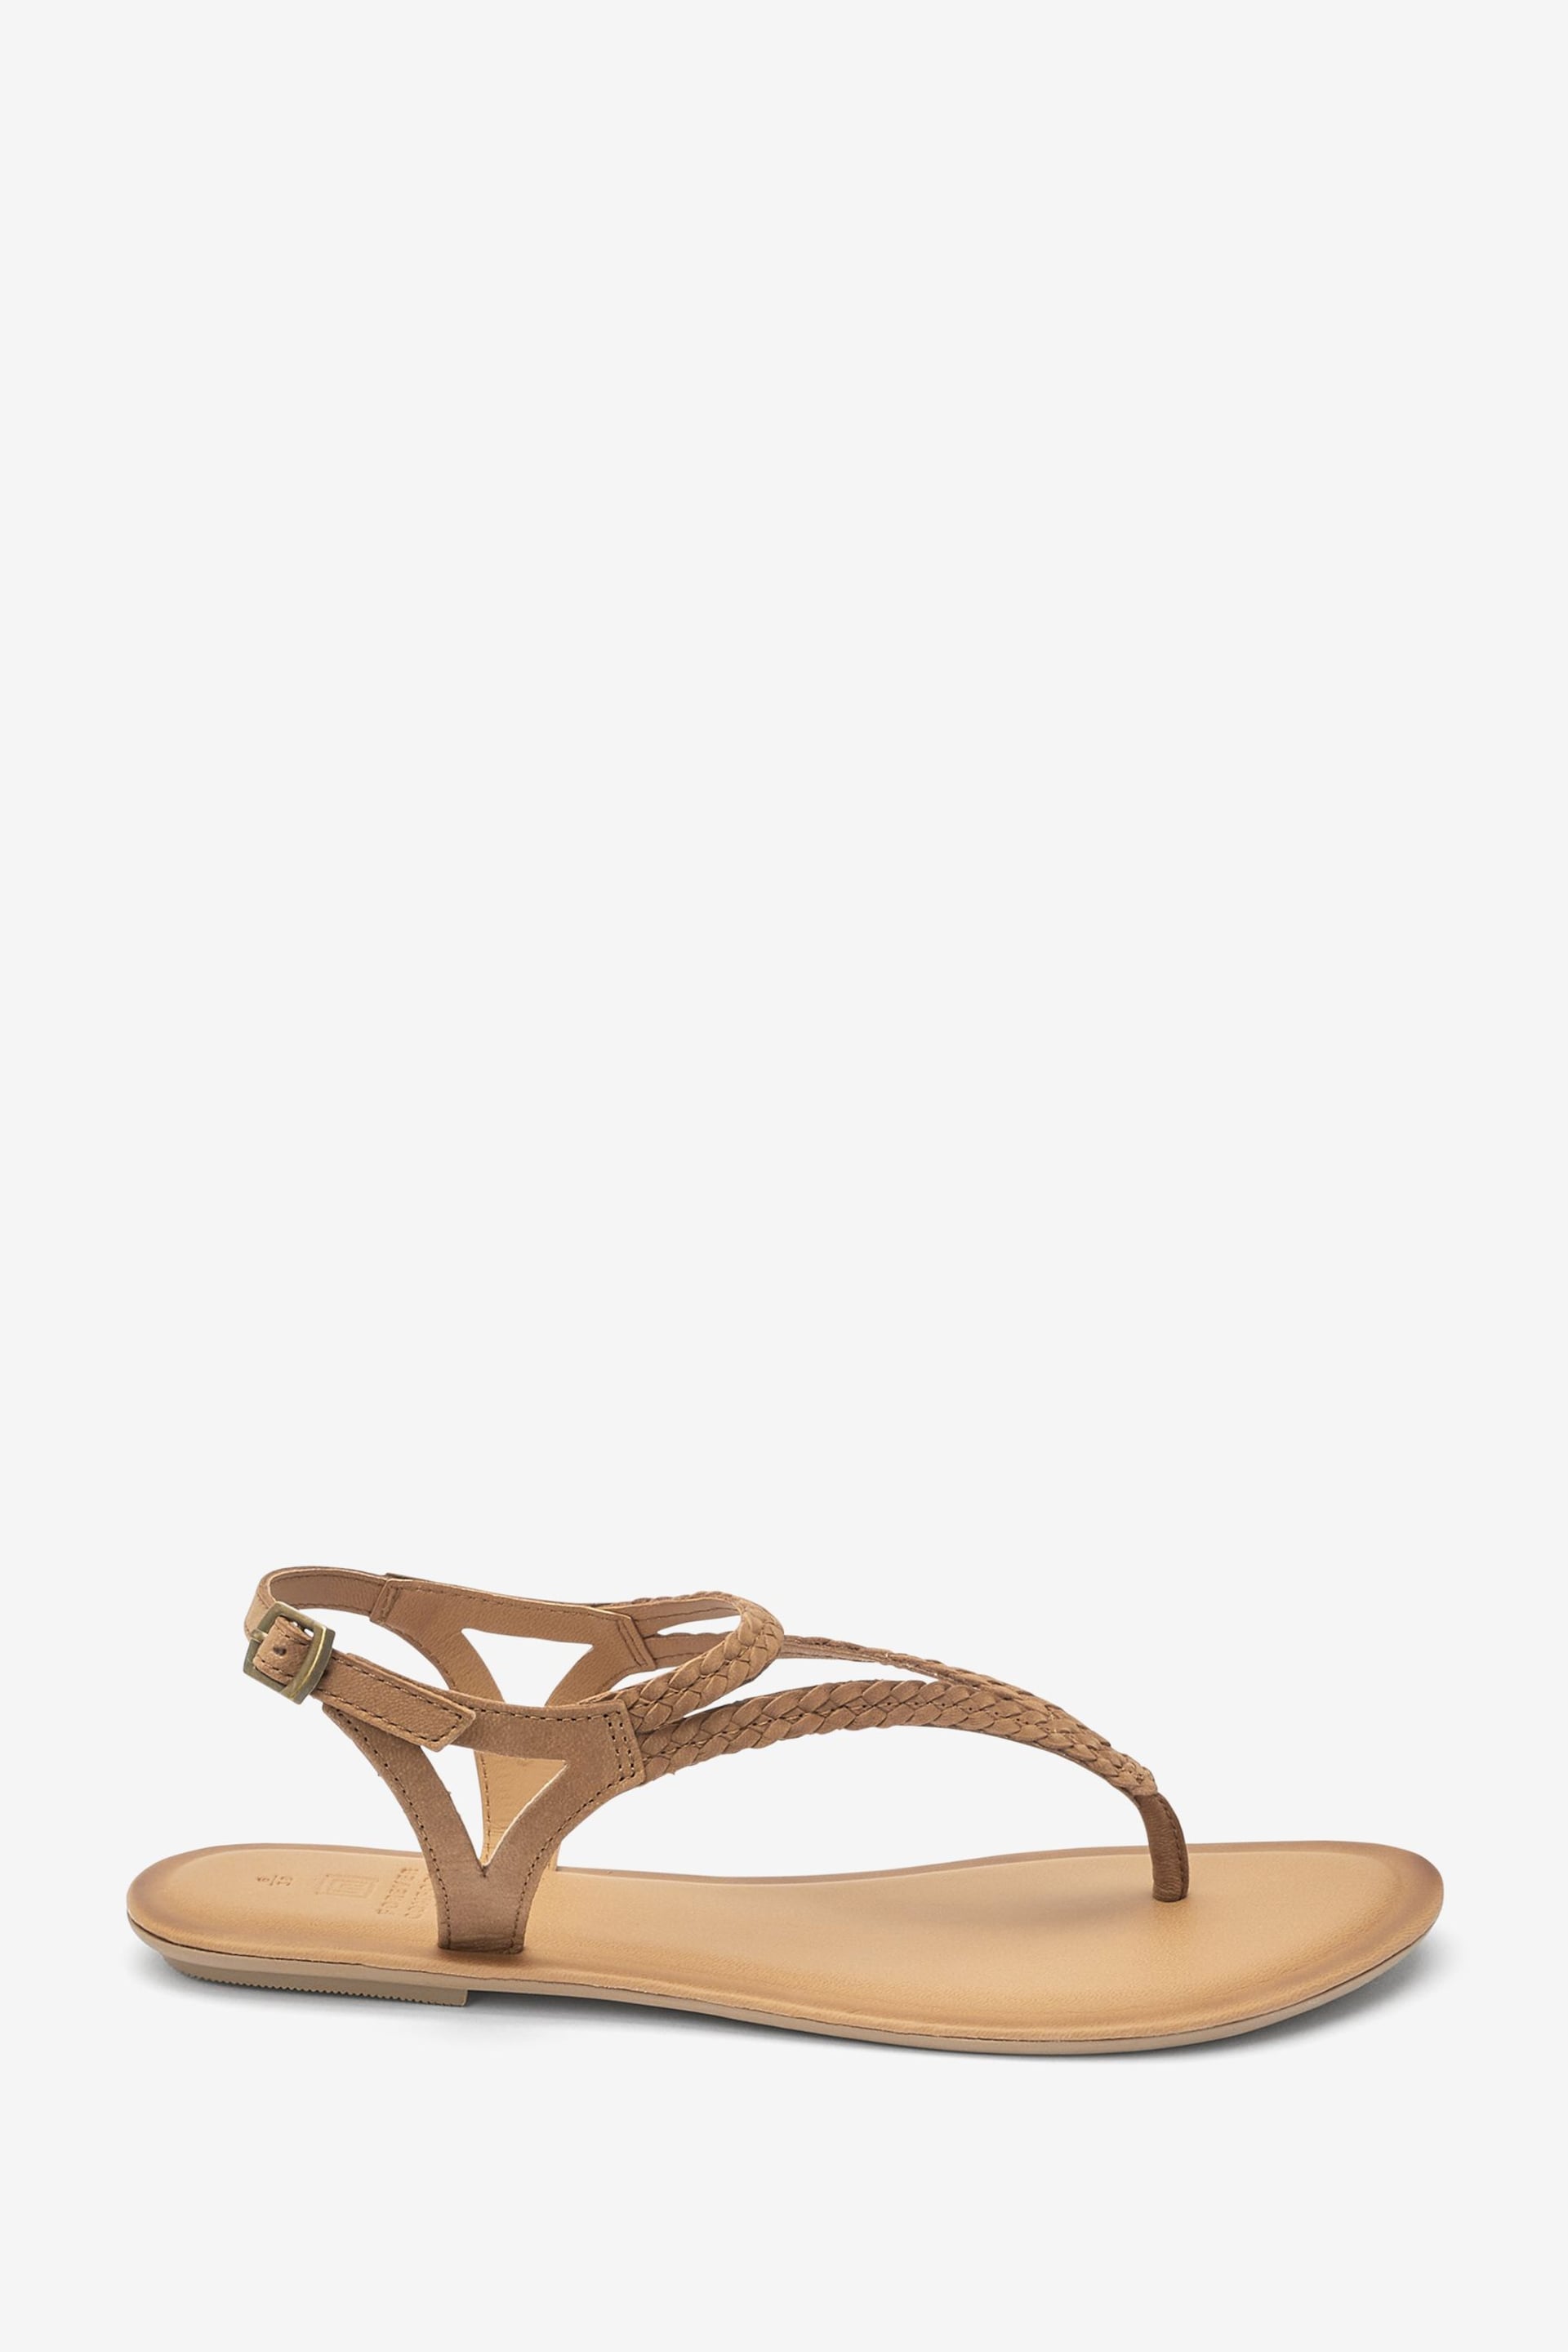 Tan Brown Regular/Wide Fit Forever Comfort® Leather Plait Toe Post Flat Sandals - Image 3 of 6